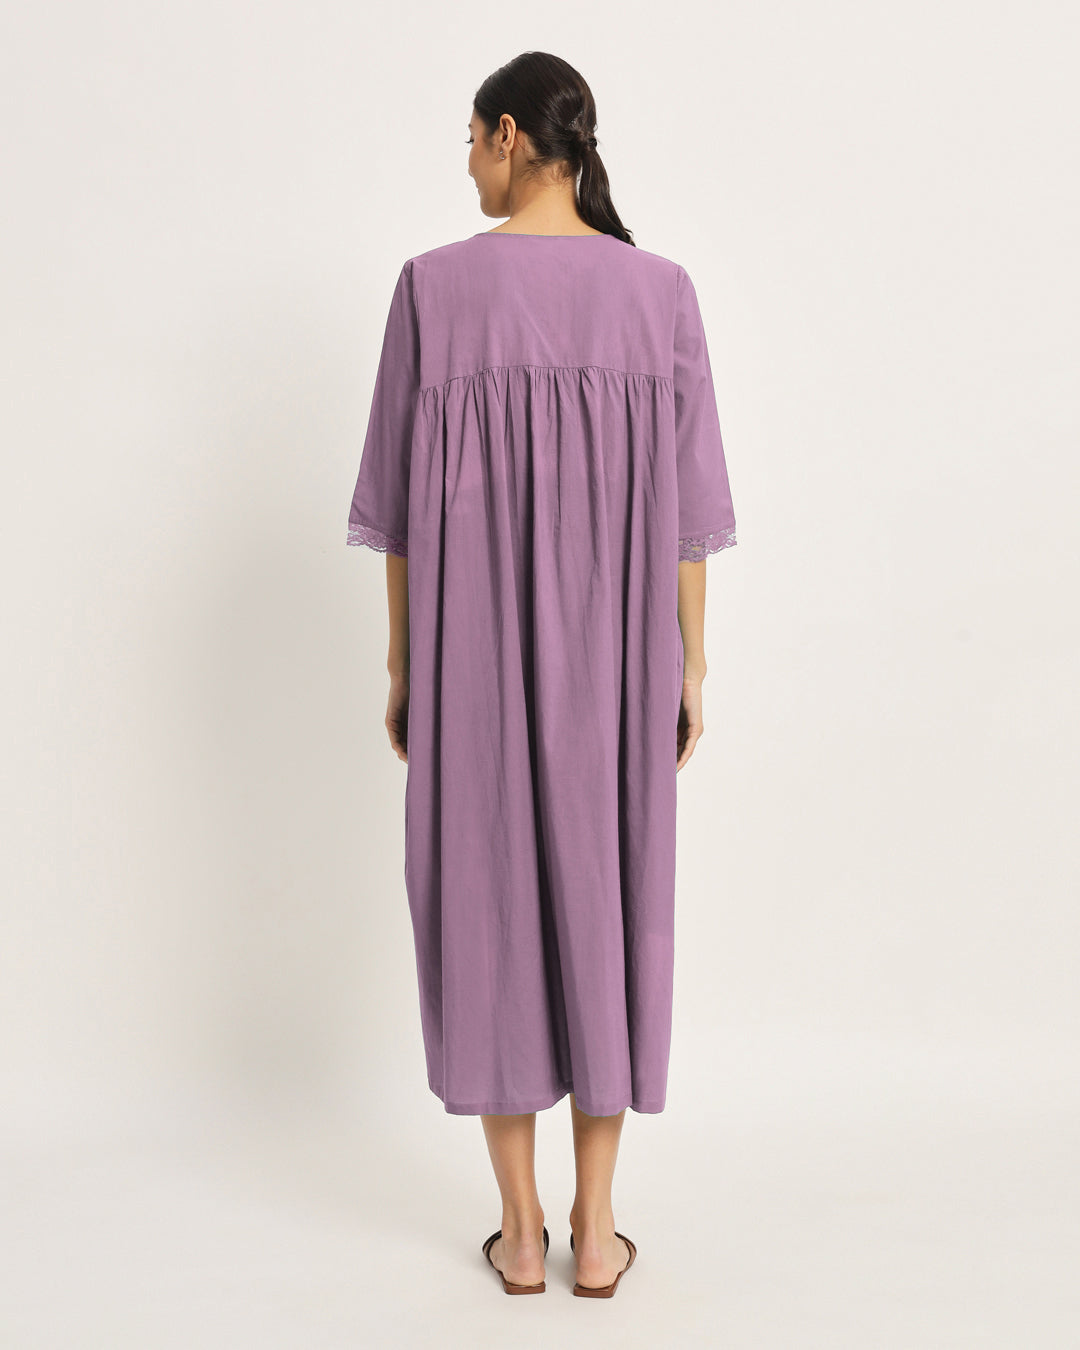 Combo: Iris Pink & Sage Green Stylish Preggo Maternity & Nursing Dress - Set of 2